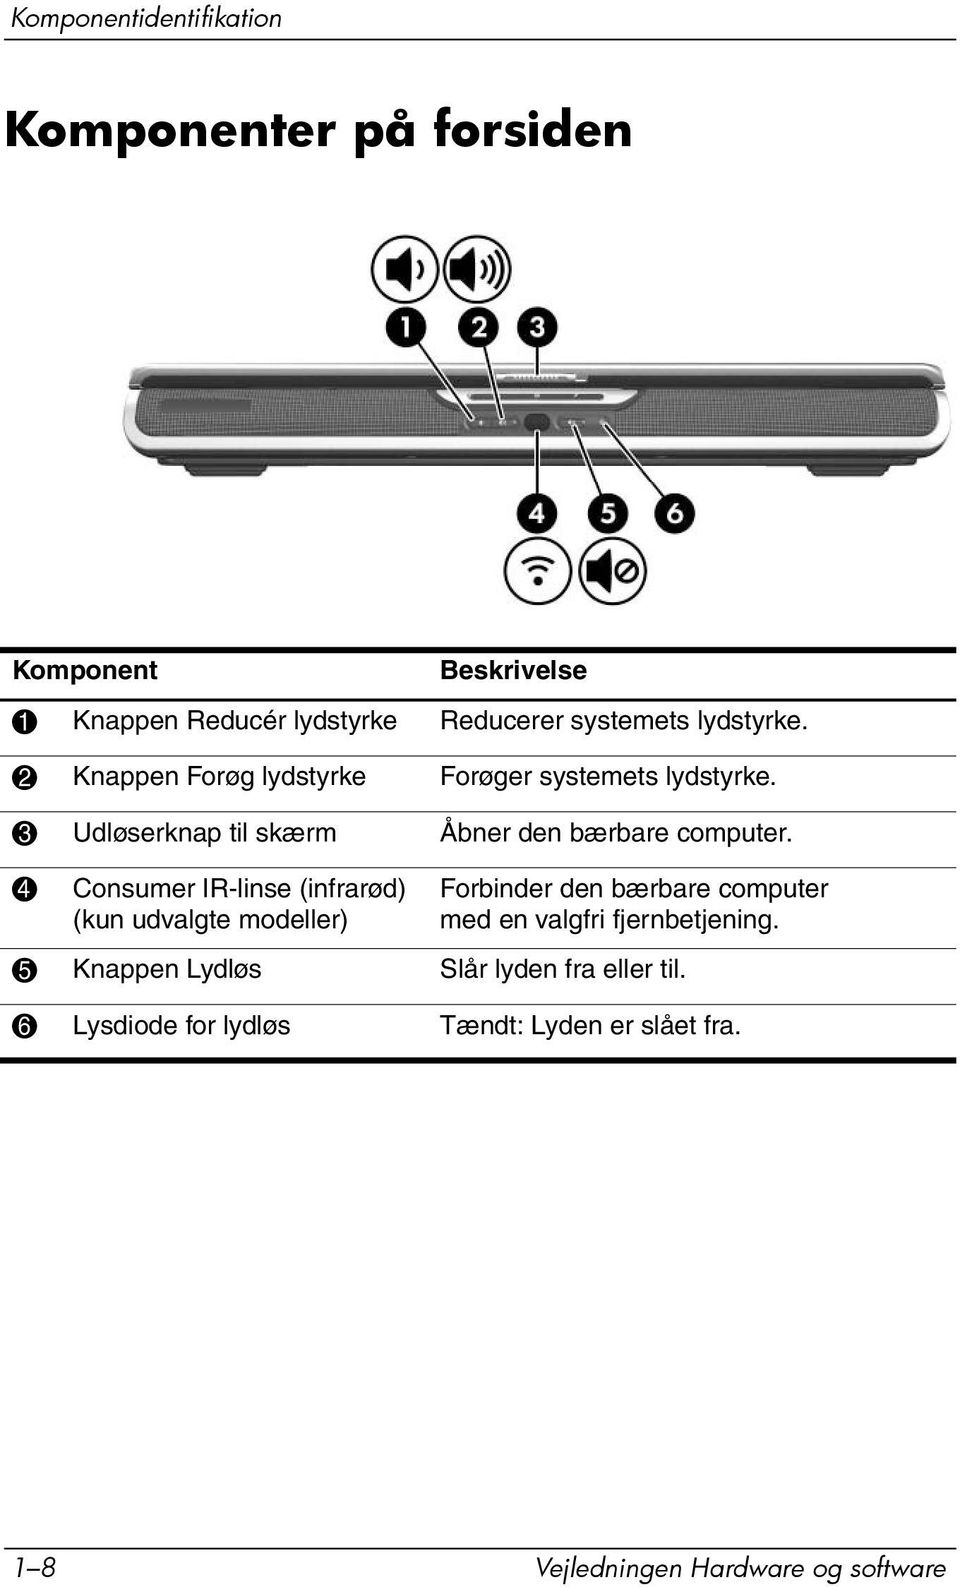 4 Consumer IR-linse (infrarød) (kun udvalgte modeller) Forbinder den bærbare computer med en valgfri fjernbetjening.